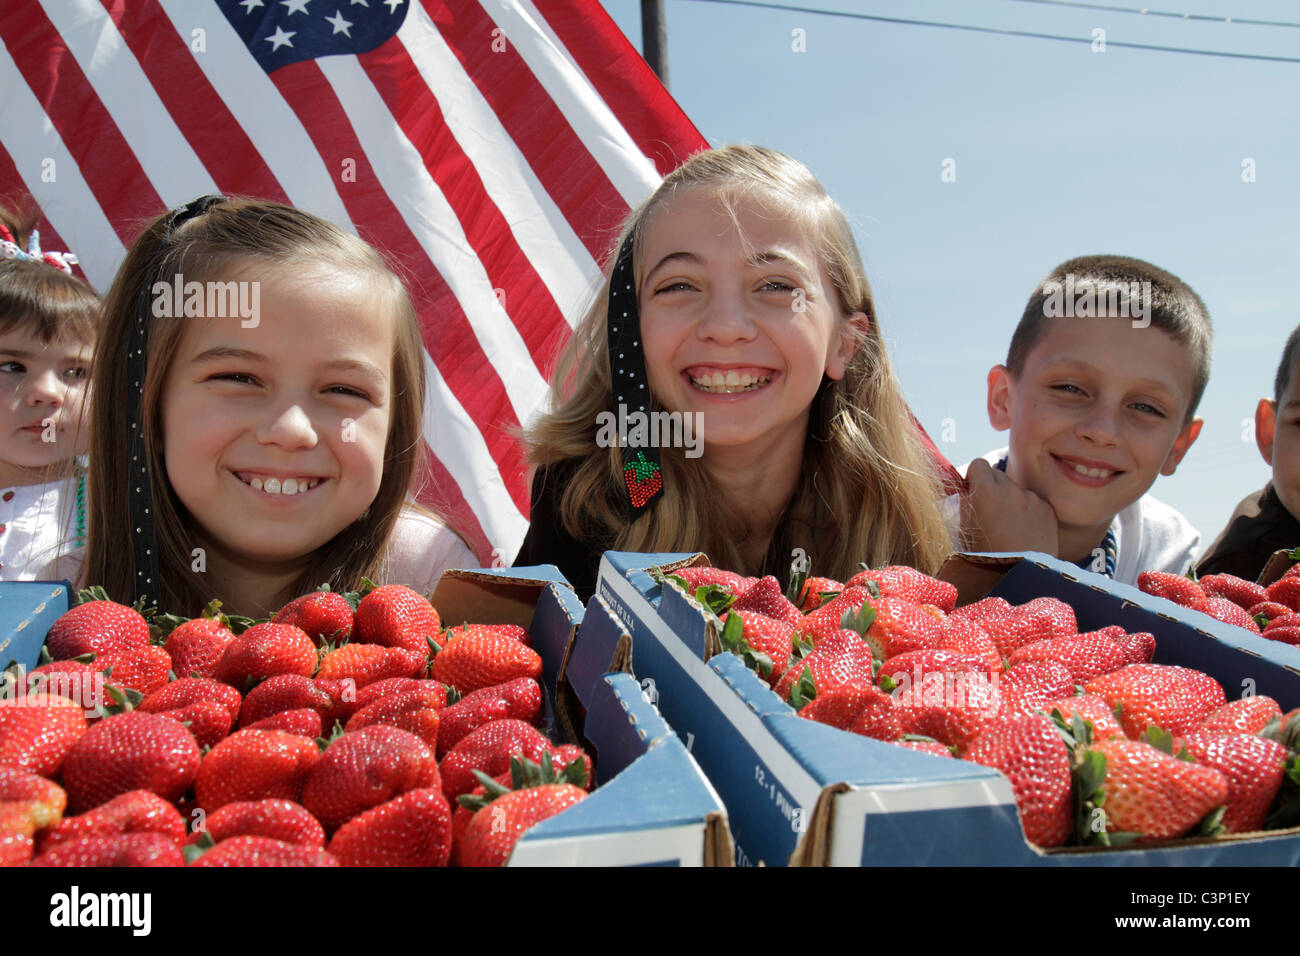 Florida,Hillsborough County,Plant City,South Evers Street,Florida Strawberry Festival,Grand Parade,strawberries,girl girls,female kid kids child child Stock Photo